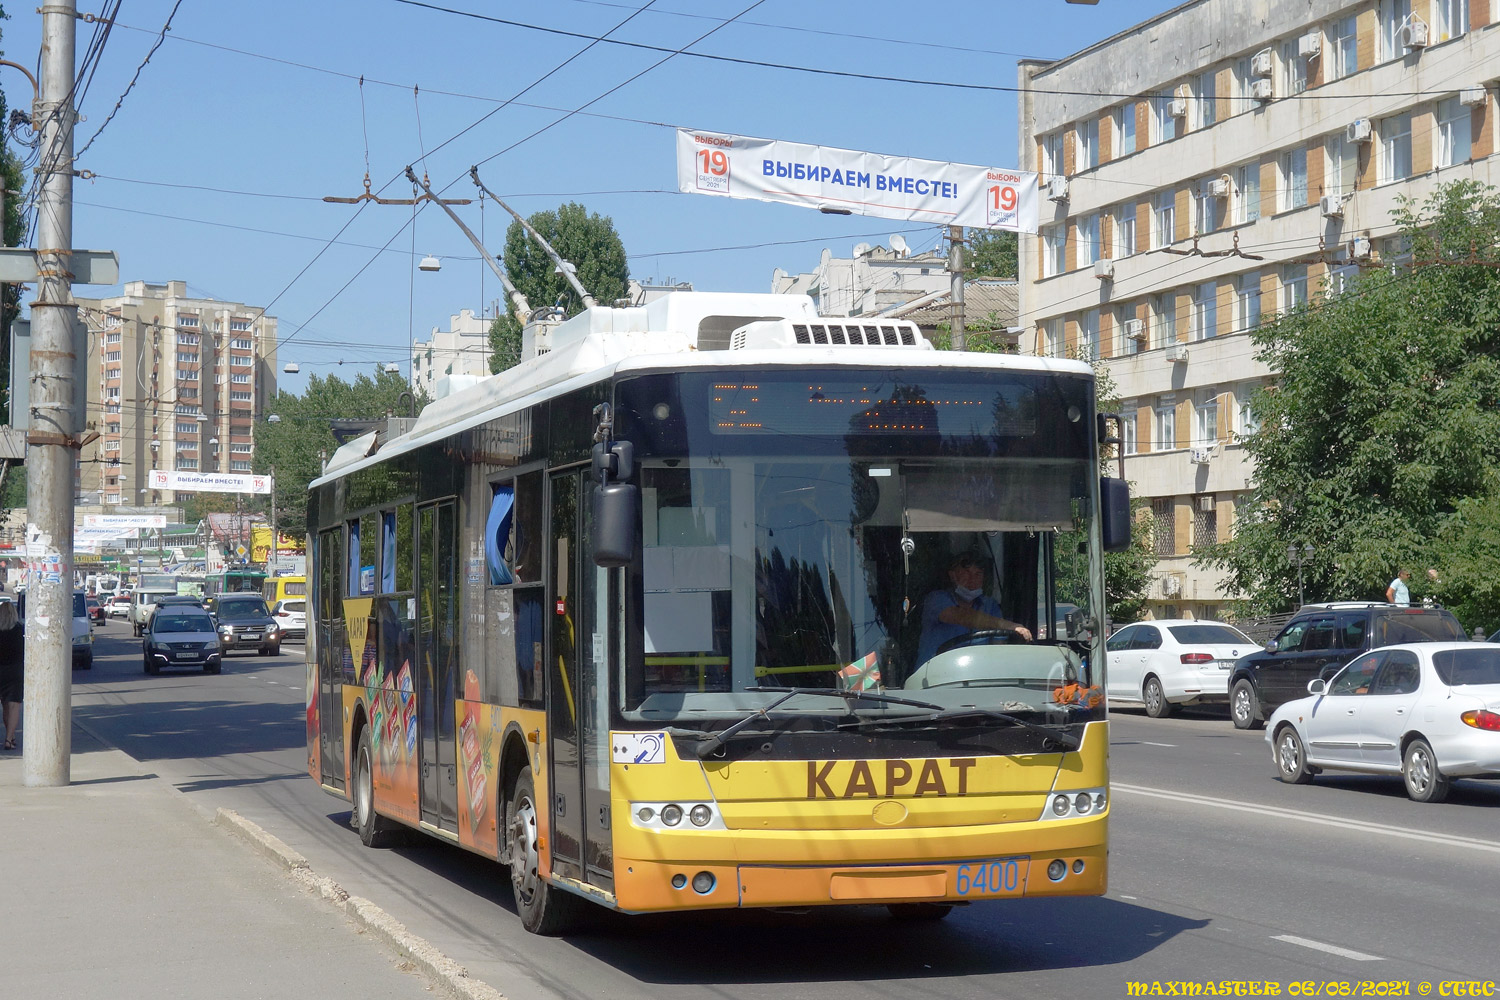 Крымский троллейбус, Богдан Т70115 № 6400